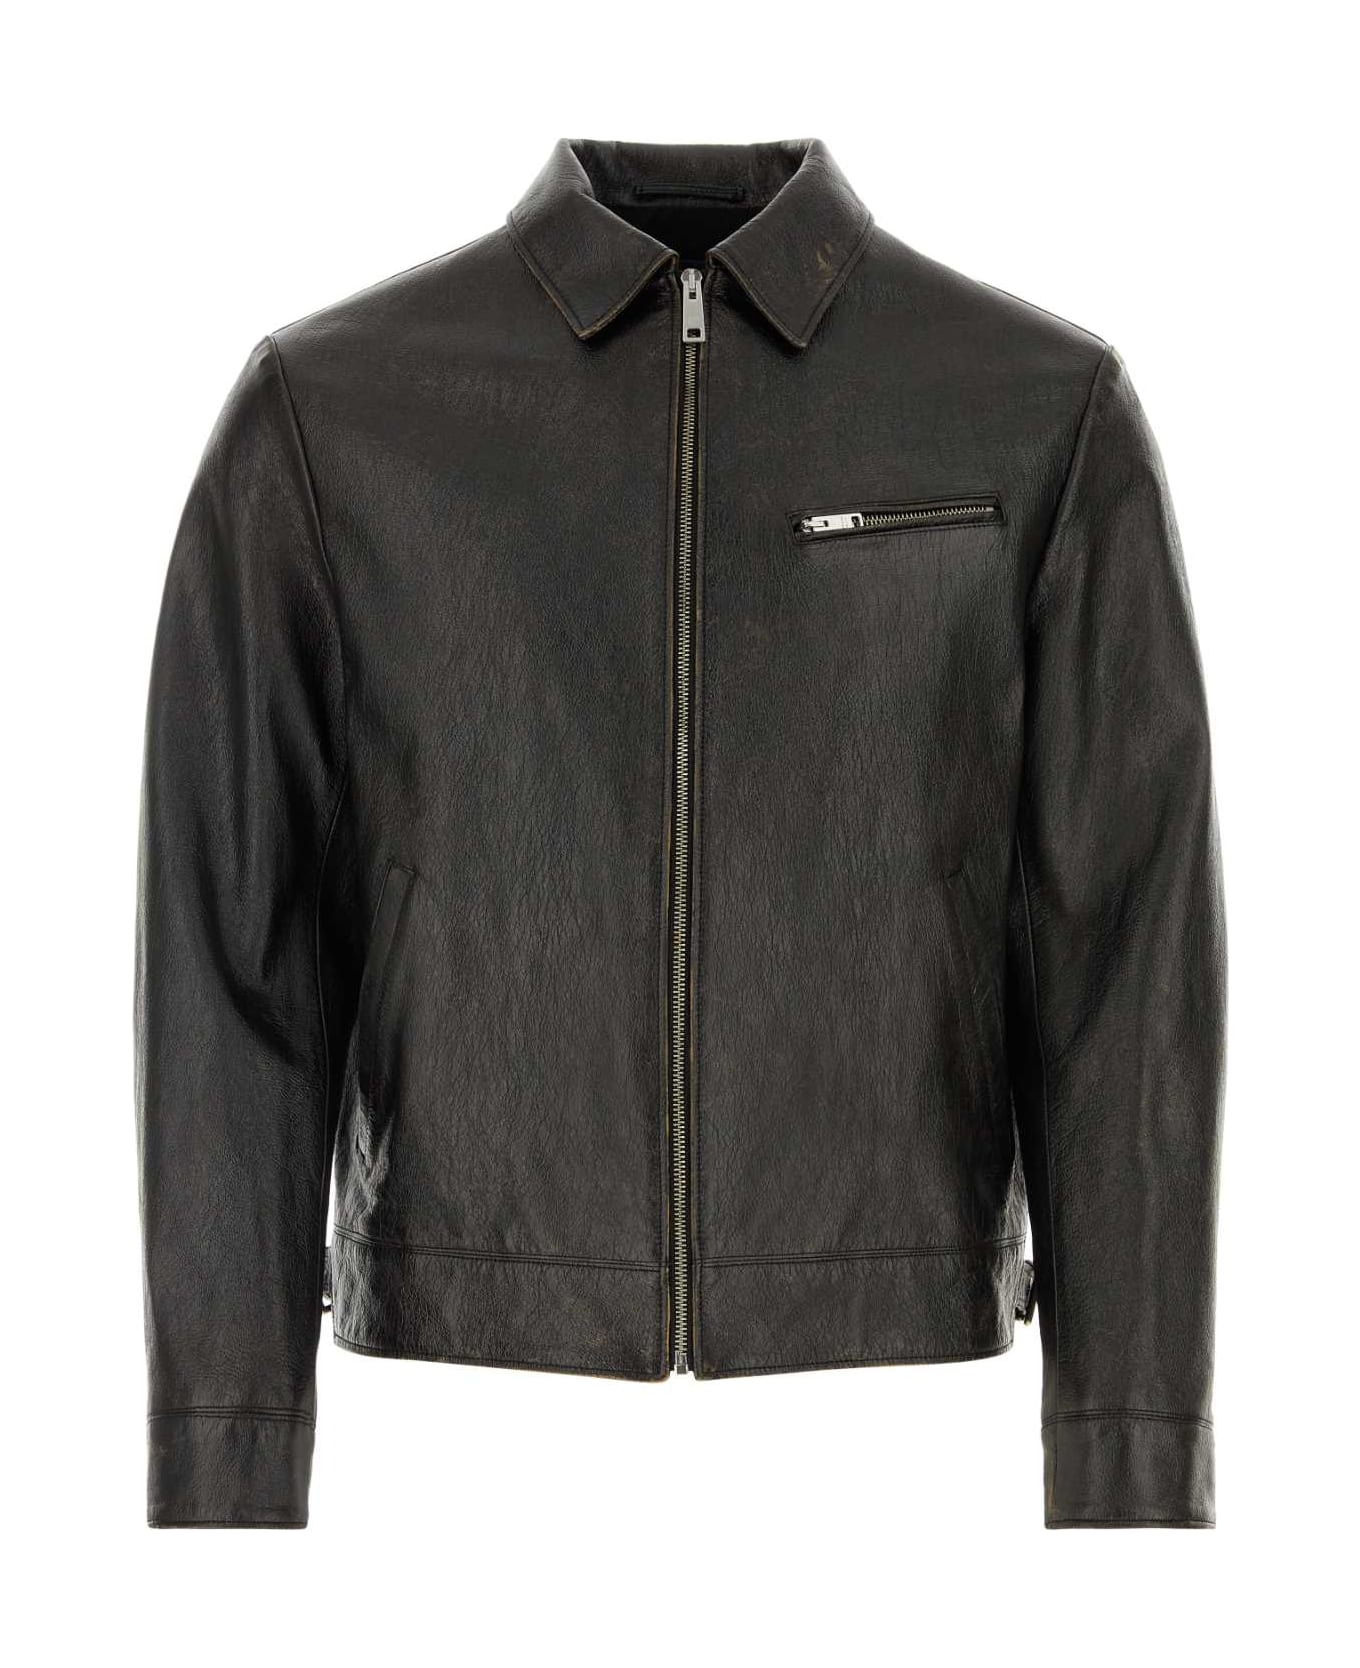 Prada zip-up Black Leather Jacket - NERO